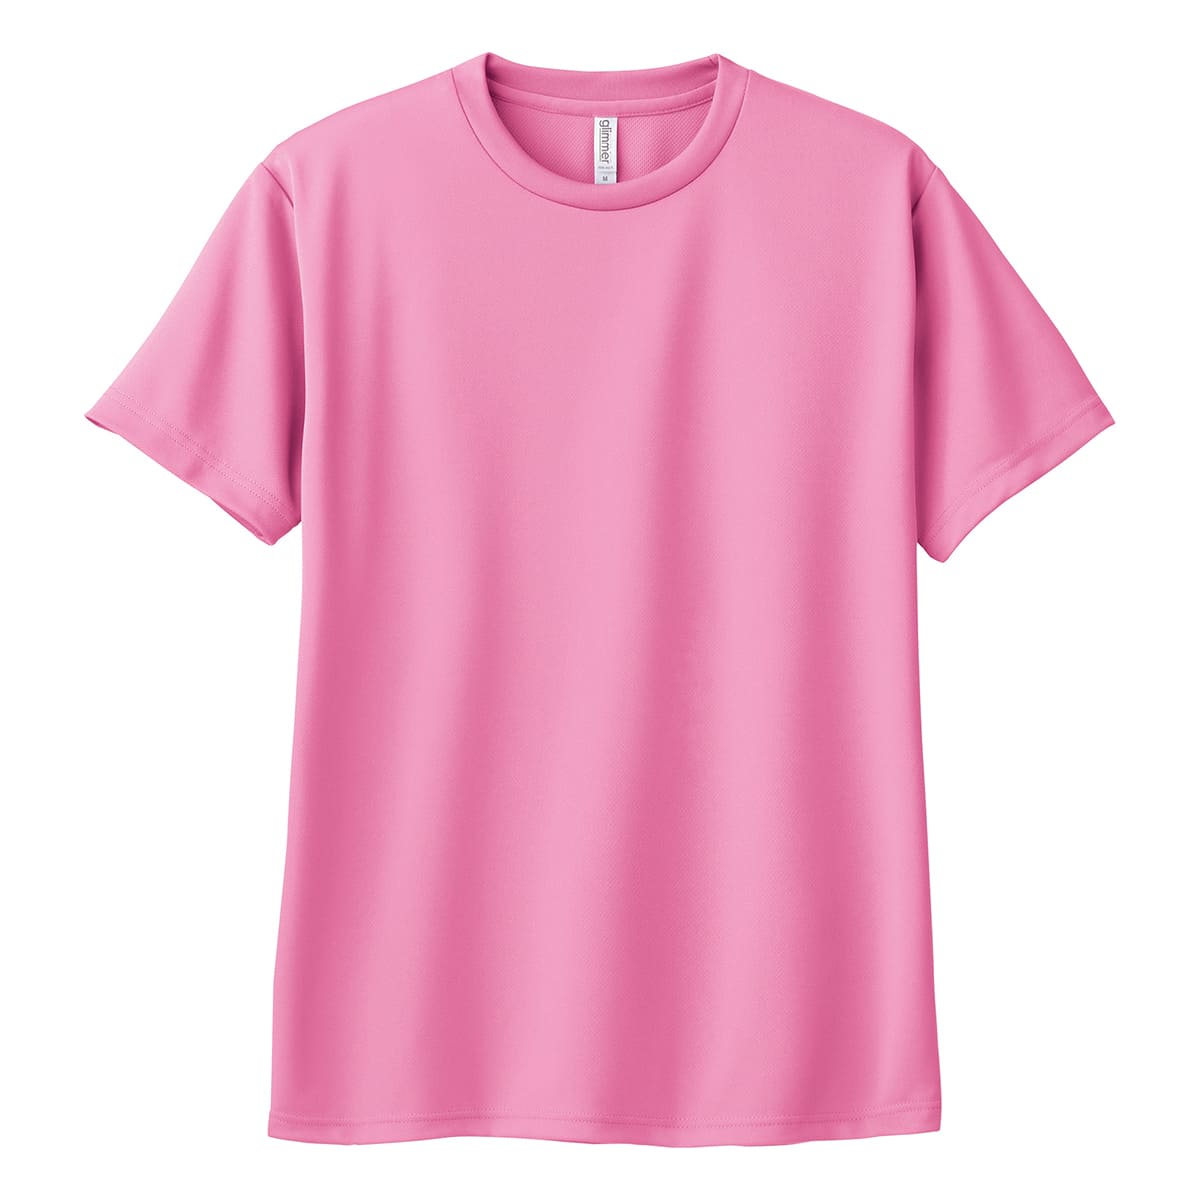 1588＊S/S pink ノースリーブ ロングシャツ